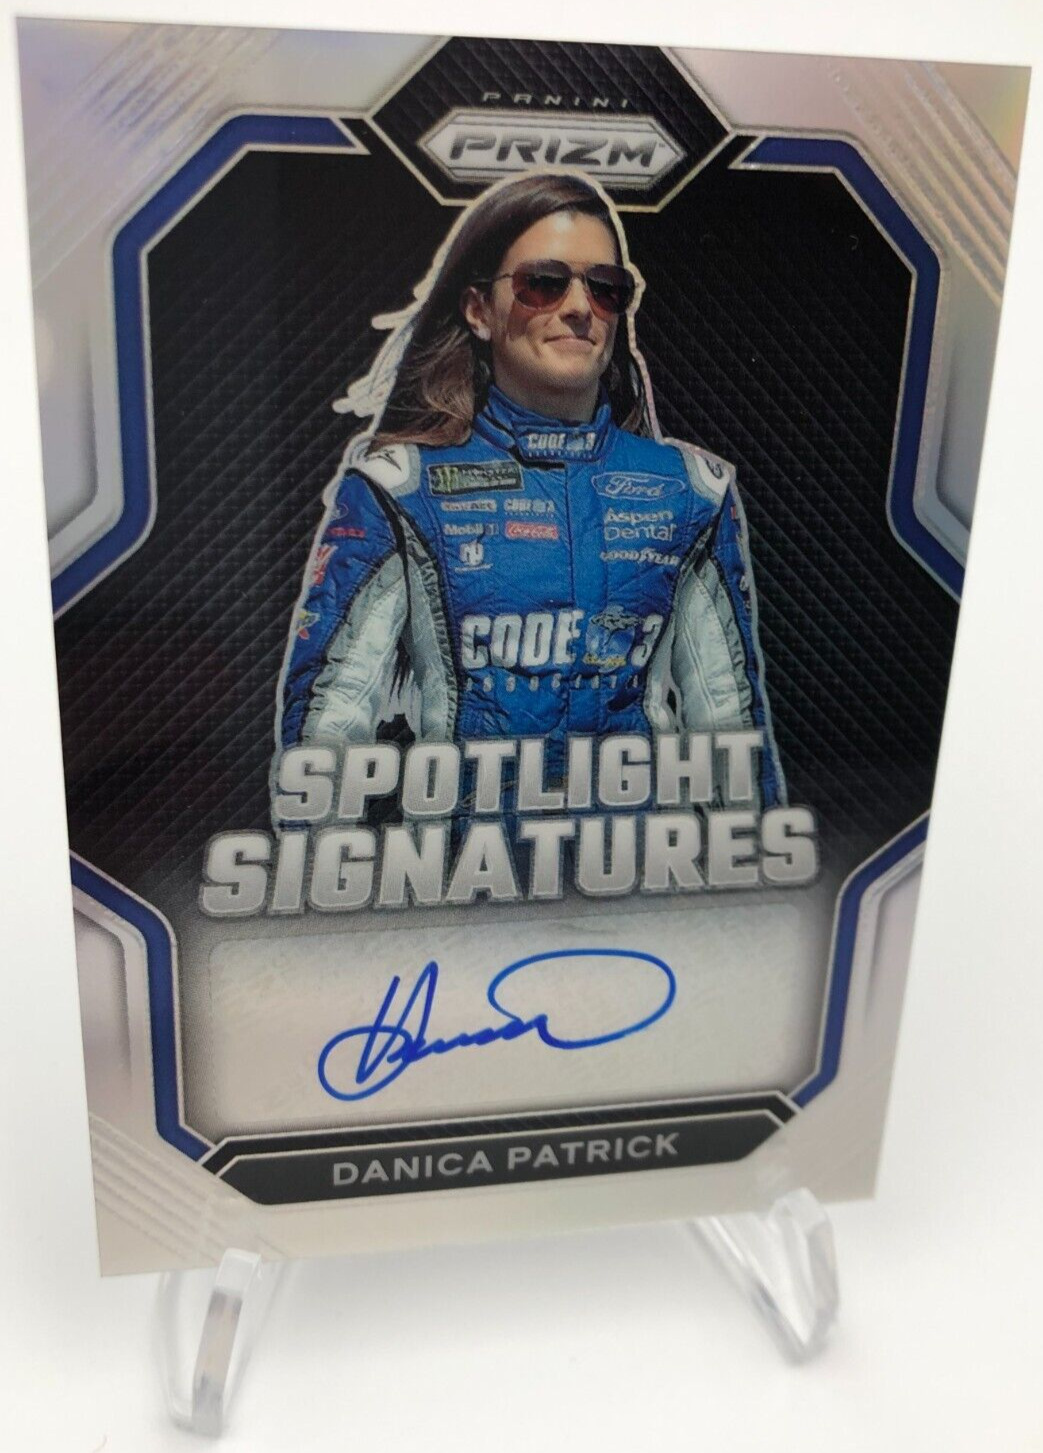 2023 DANICA PATRICK AUTO Panini Prizm SPOTLIGHT SIGNATURES Card NASCAR